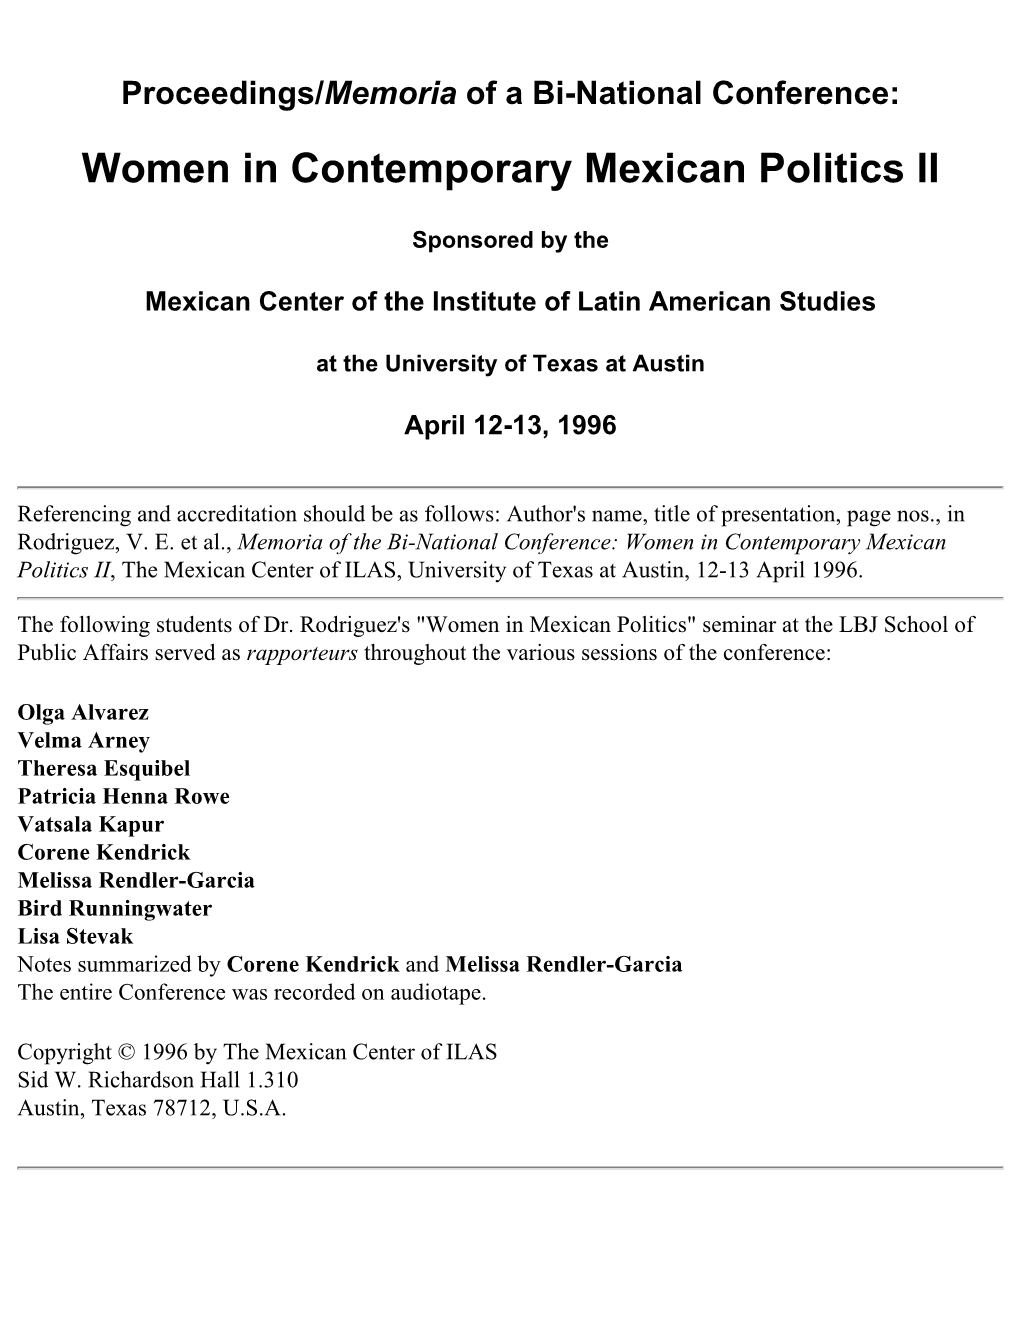 Women in Contemporary Mexican Politics II